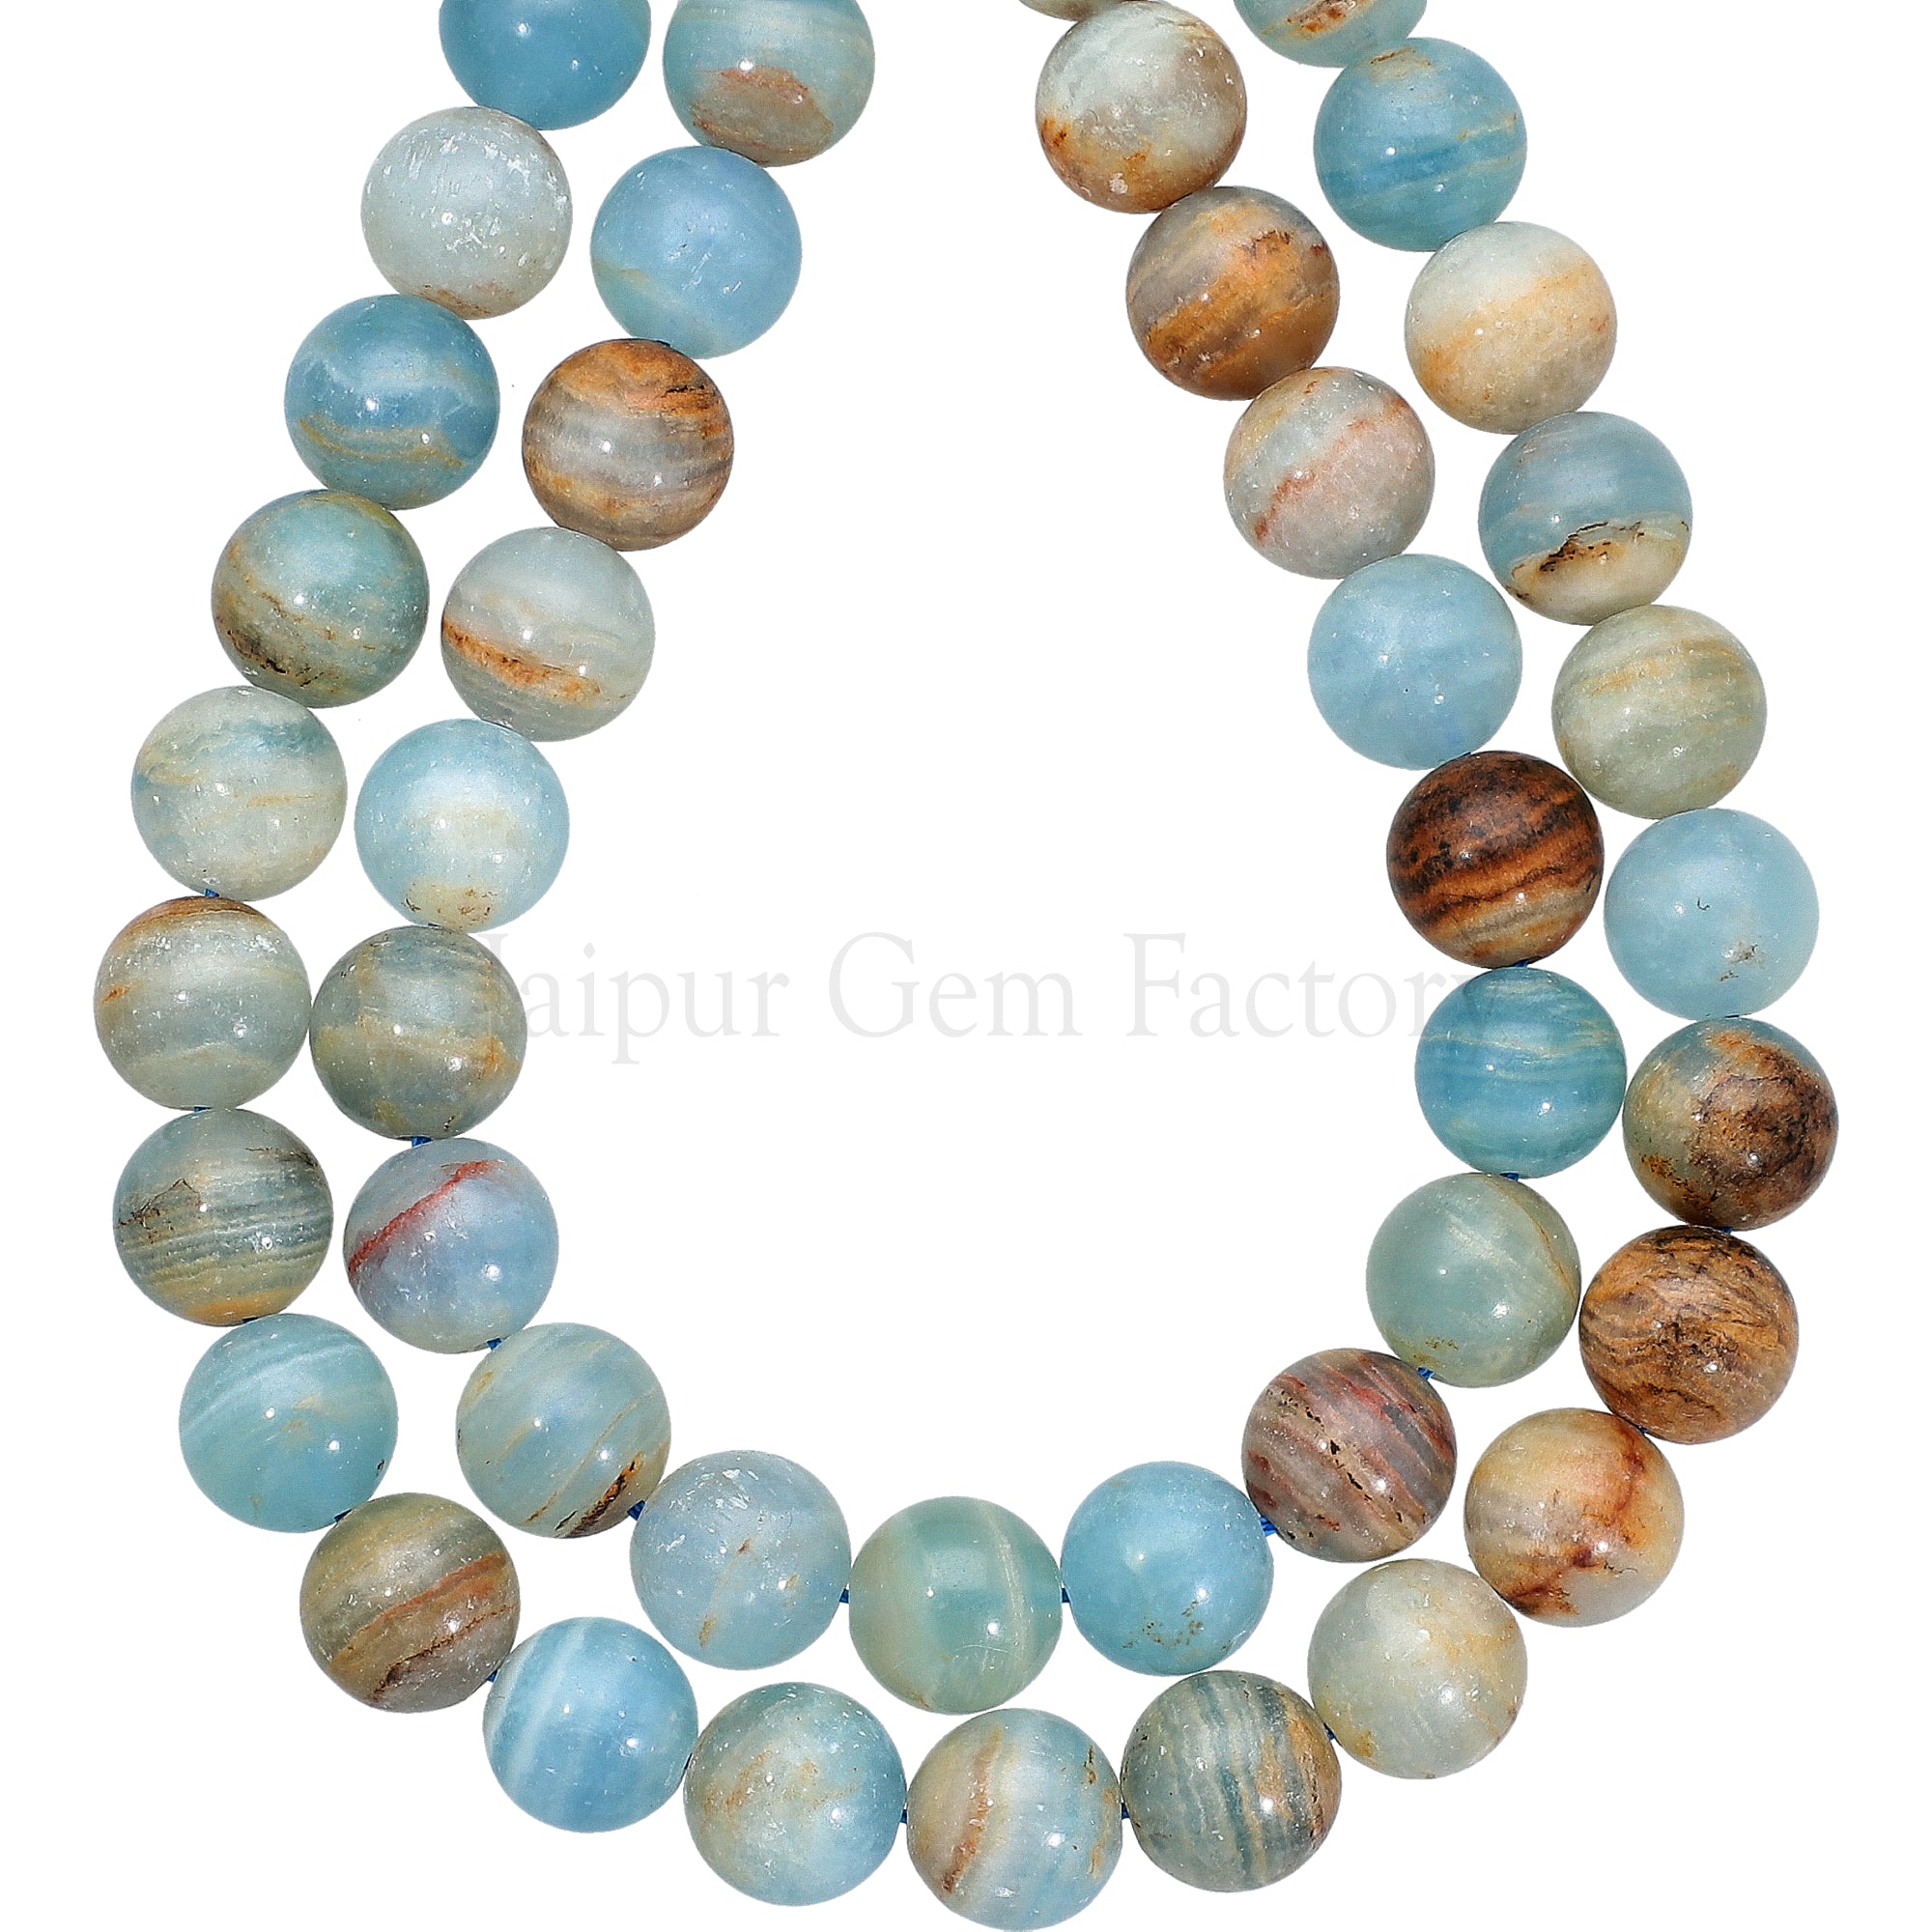 Blue Calcite Round Beads Jaipur Gem Factory